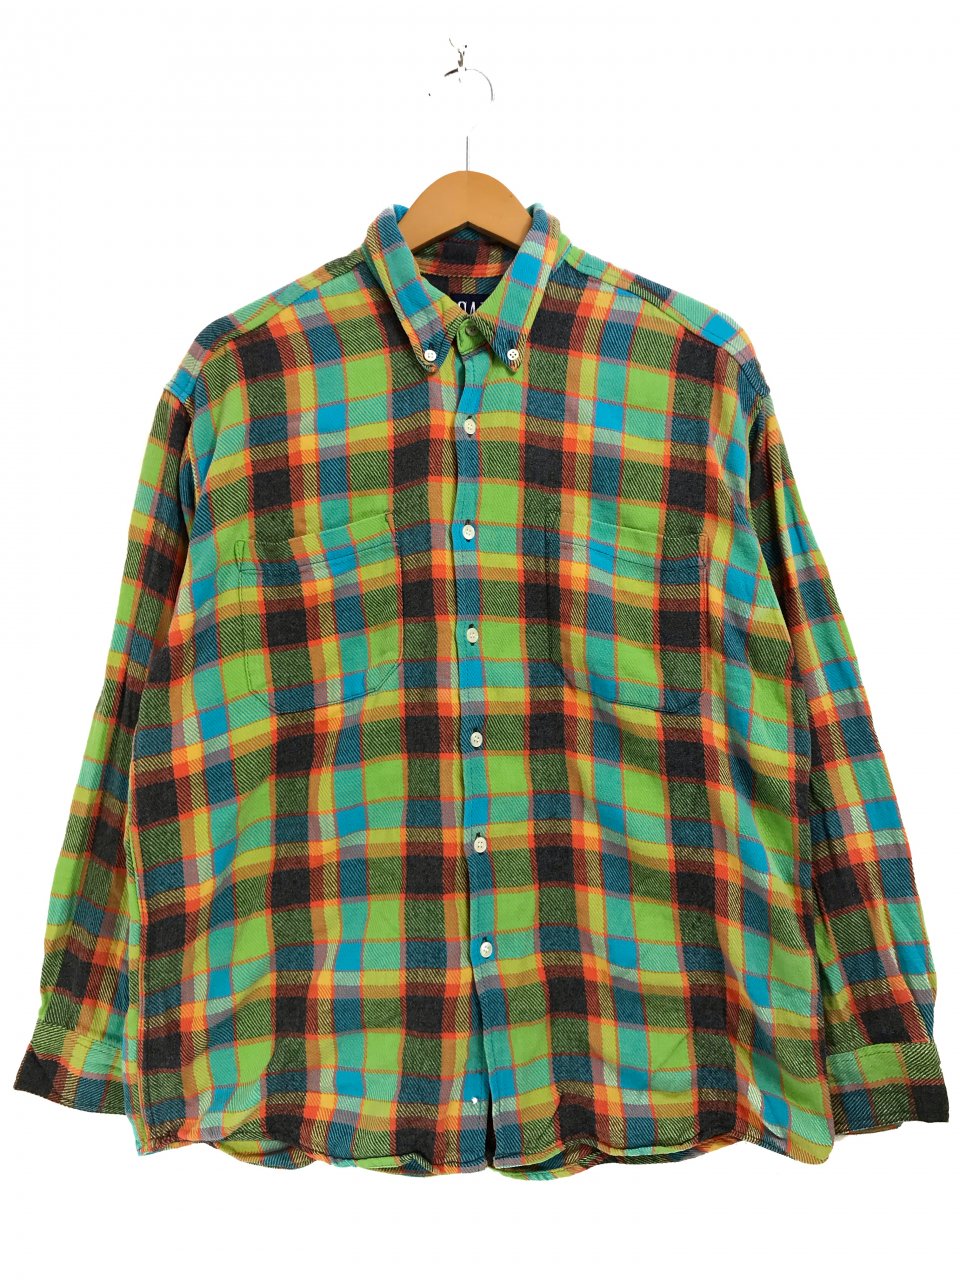 90s GAP Check Flannel BD L/S Shirt 緑水色 L オールドギャップ 